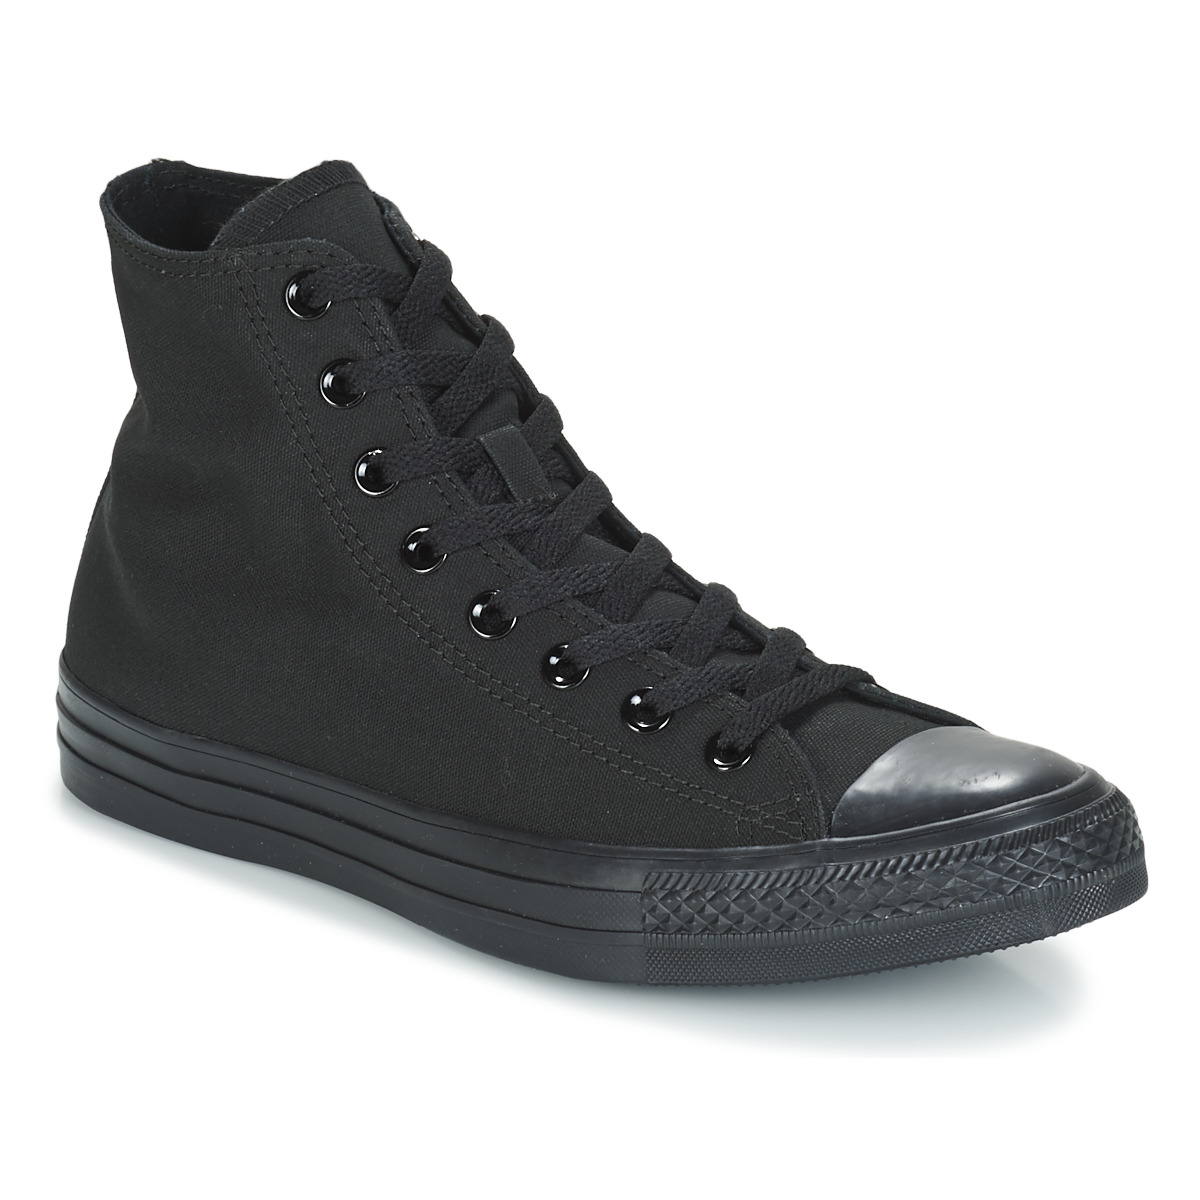 Converse Chuck Taylor All Star Sneakers Hoog Unisex - Black Monochrome - Maat 39.5